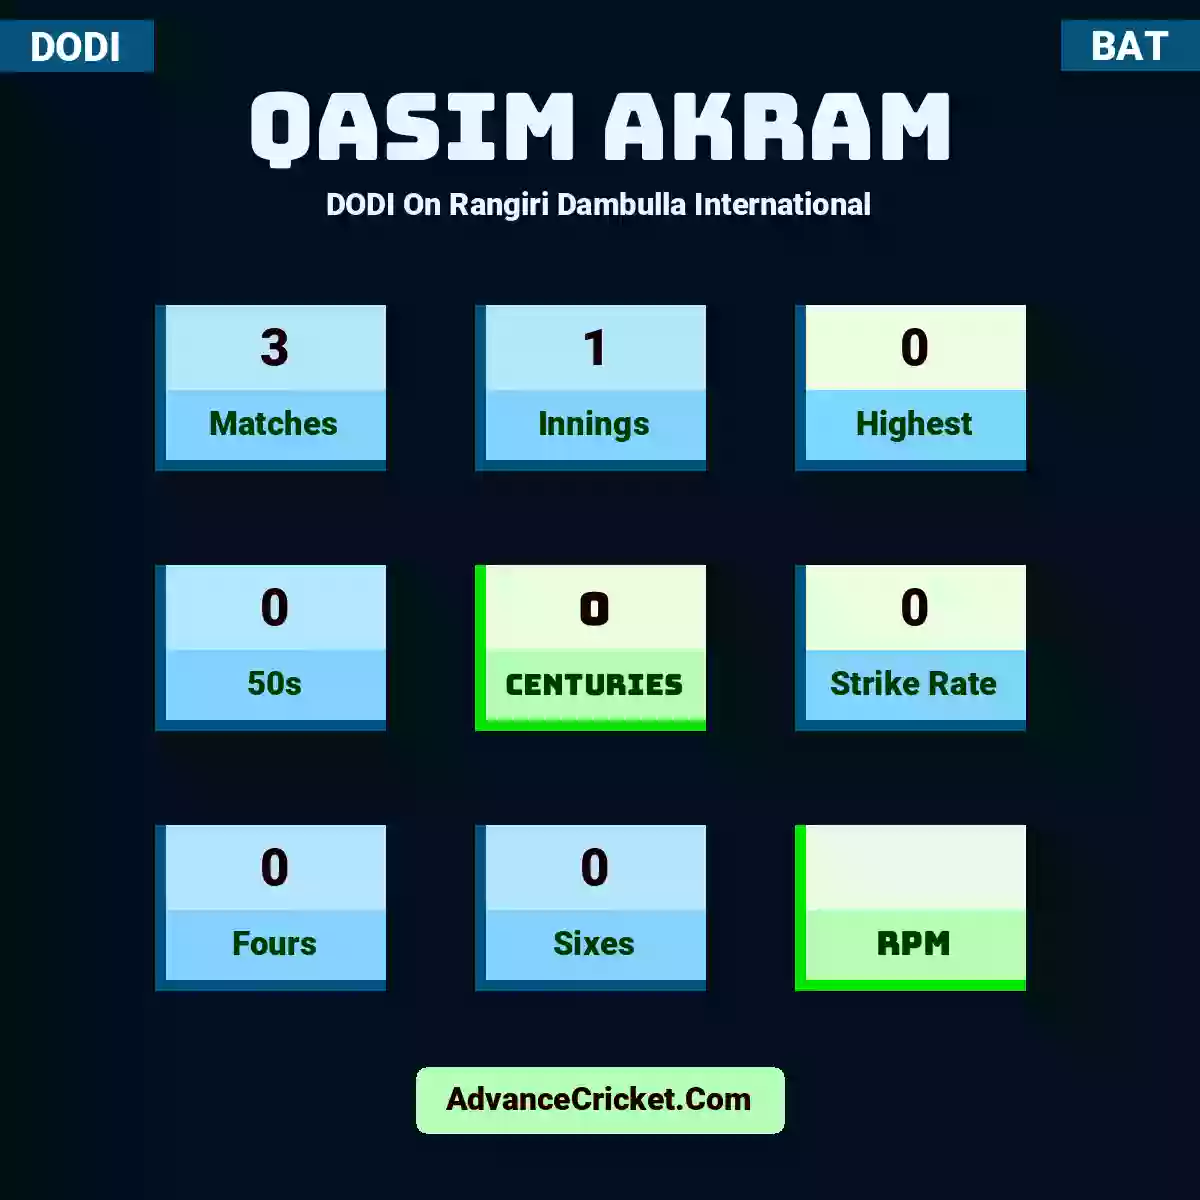 Qasim Akram DODI  On Rangiri Dambulla International, Qasim Akram played 3 matches, scored 0 runs as highest, 0 half-centuries, and 0 centuries, with a strike rate of 0. Q.Akram hit 0 fours and 0 sixes.